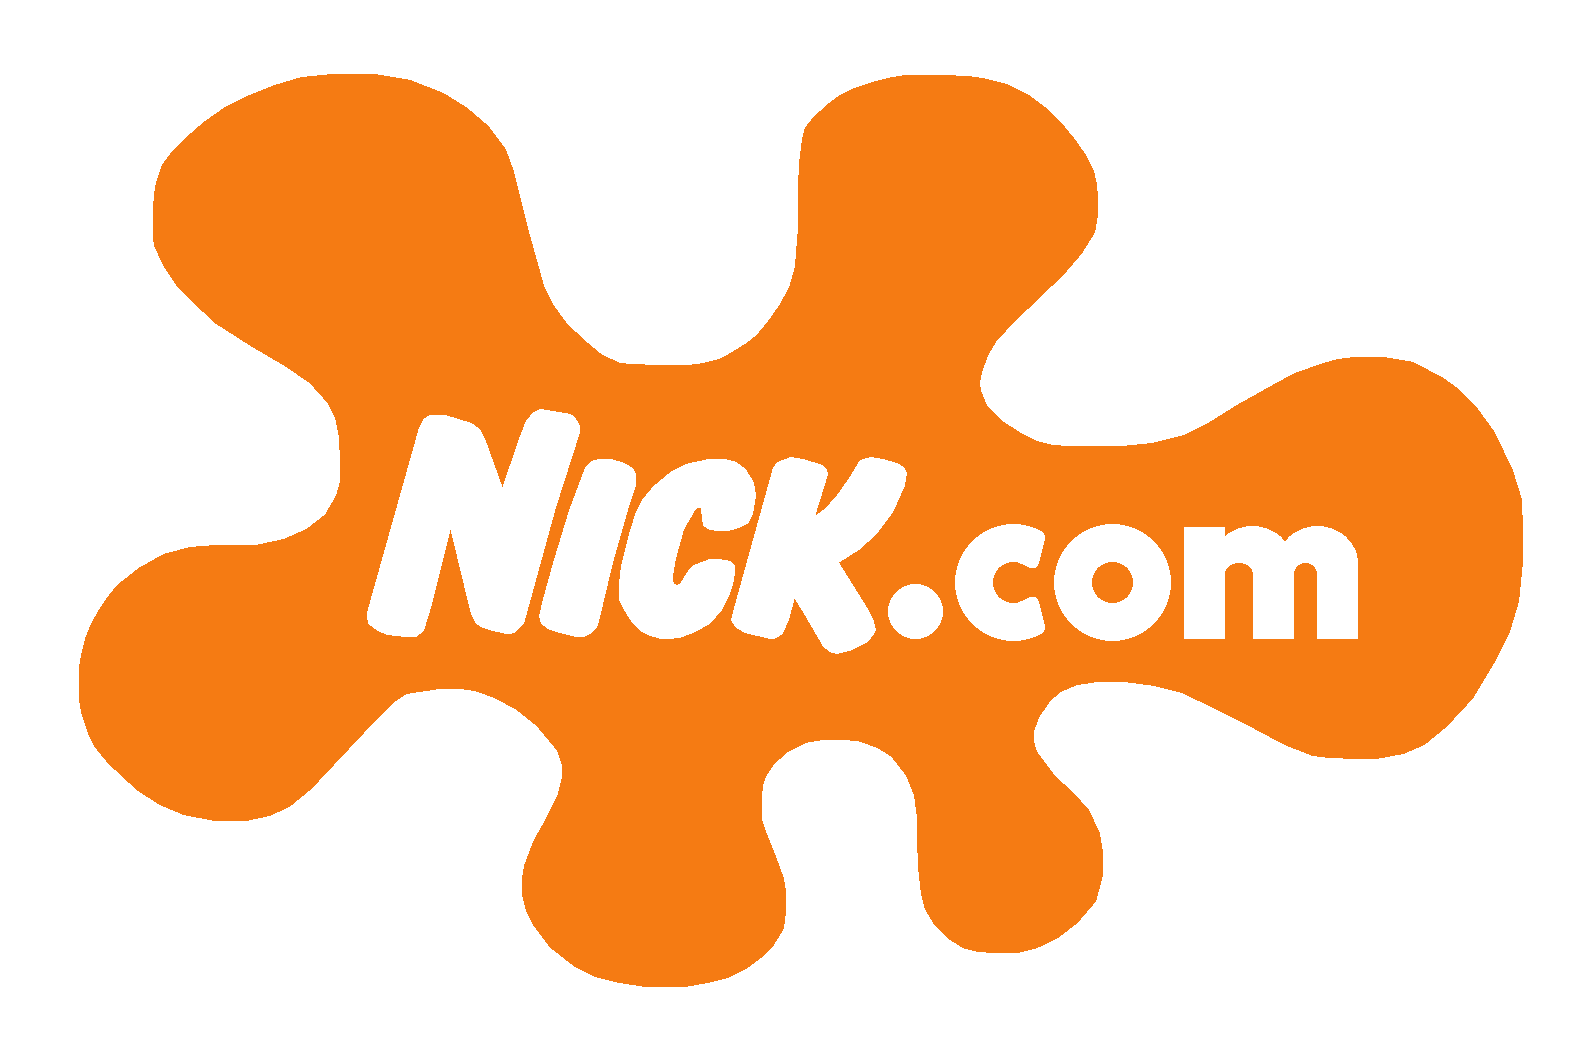 Nick tried. Nickelodeon логотип. Nick. Com логотип. Nick 2004 logo.